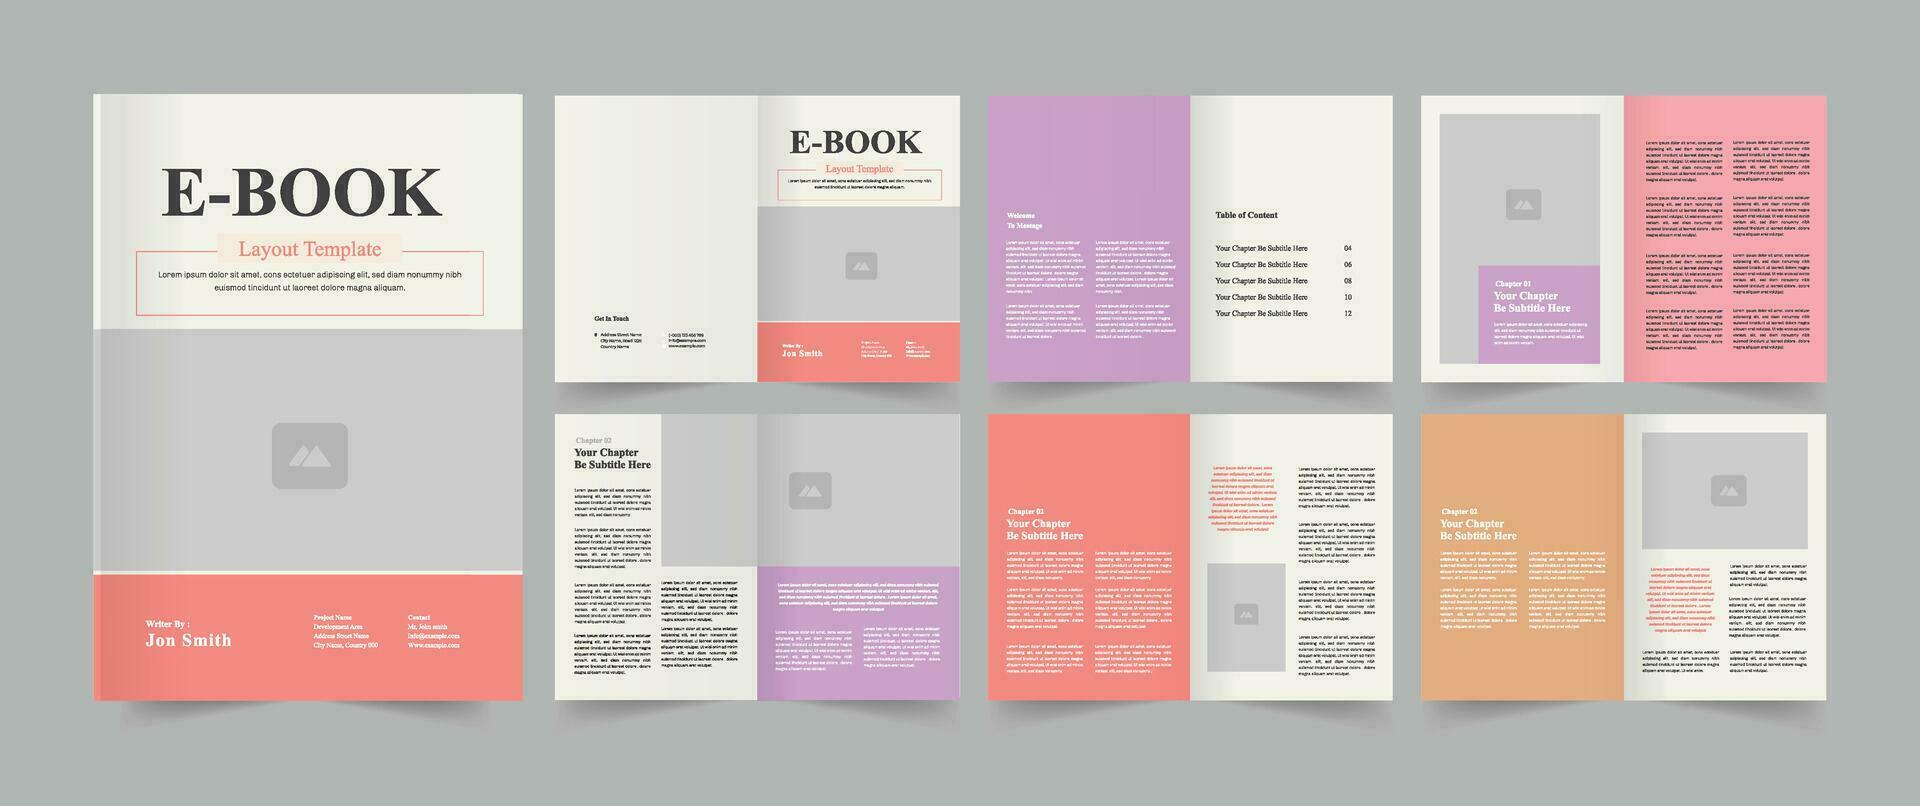 eBook design Template vector